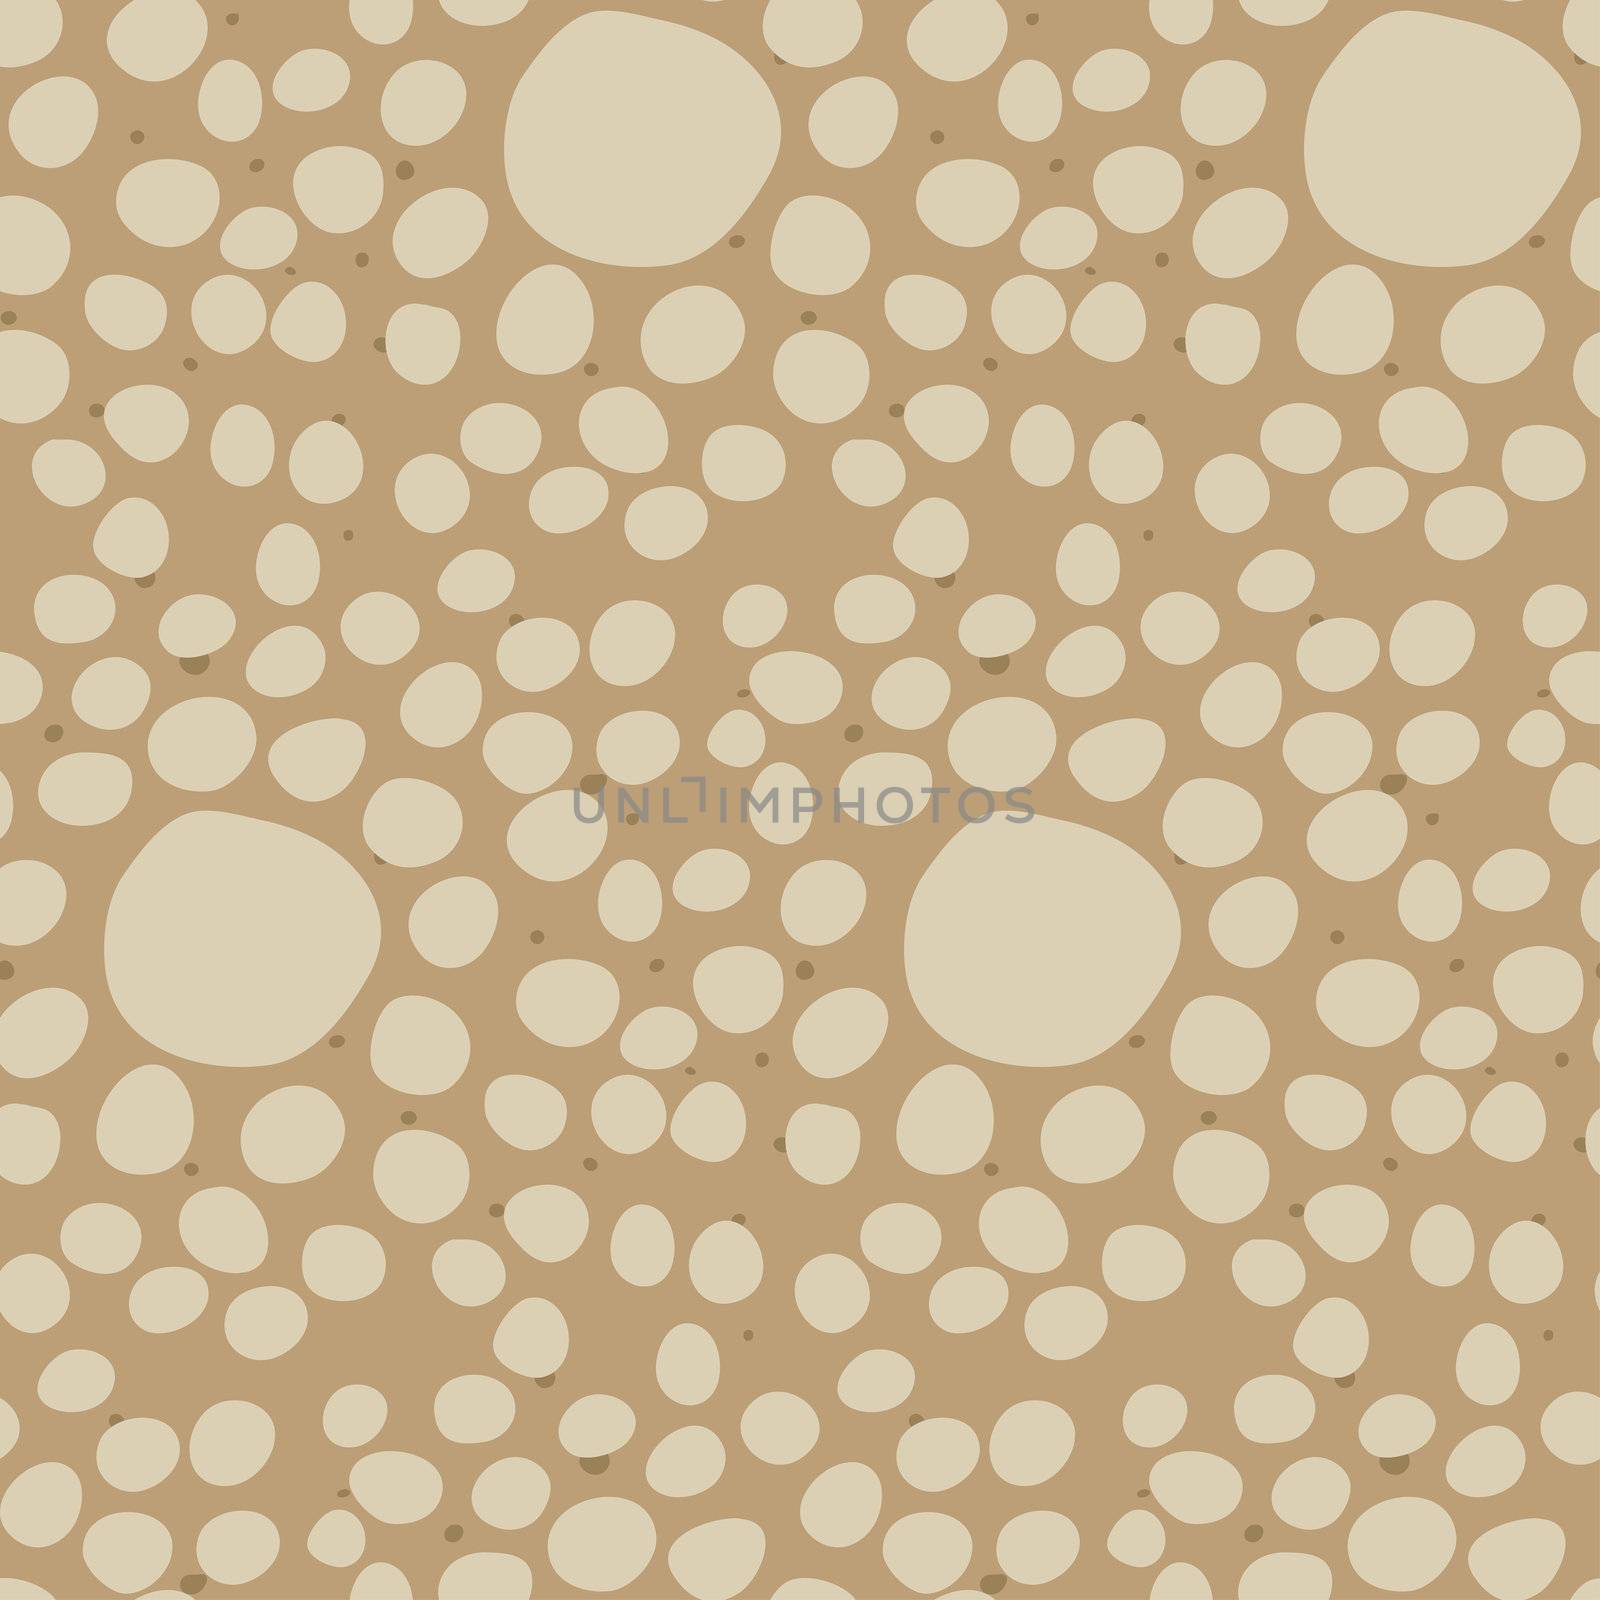 Random brown blobs in a seamless wallpaper pattern background